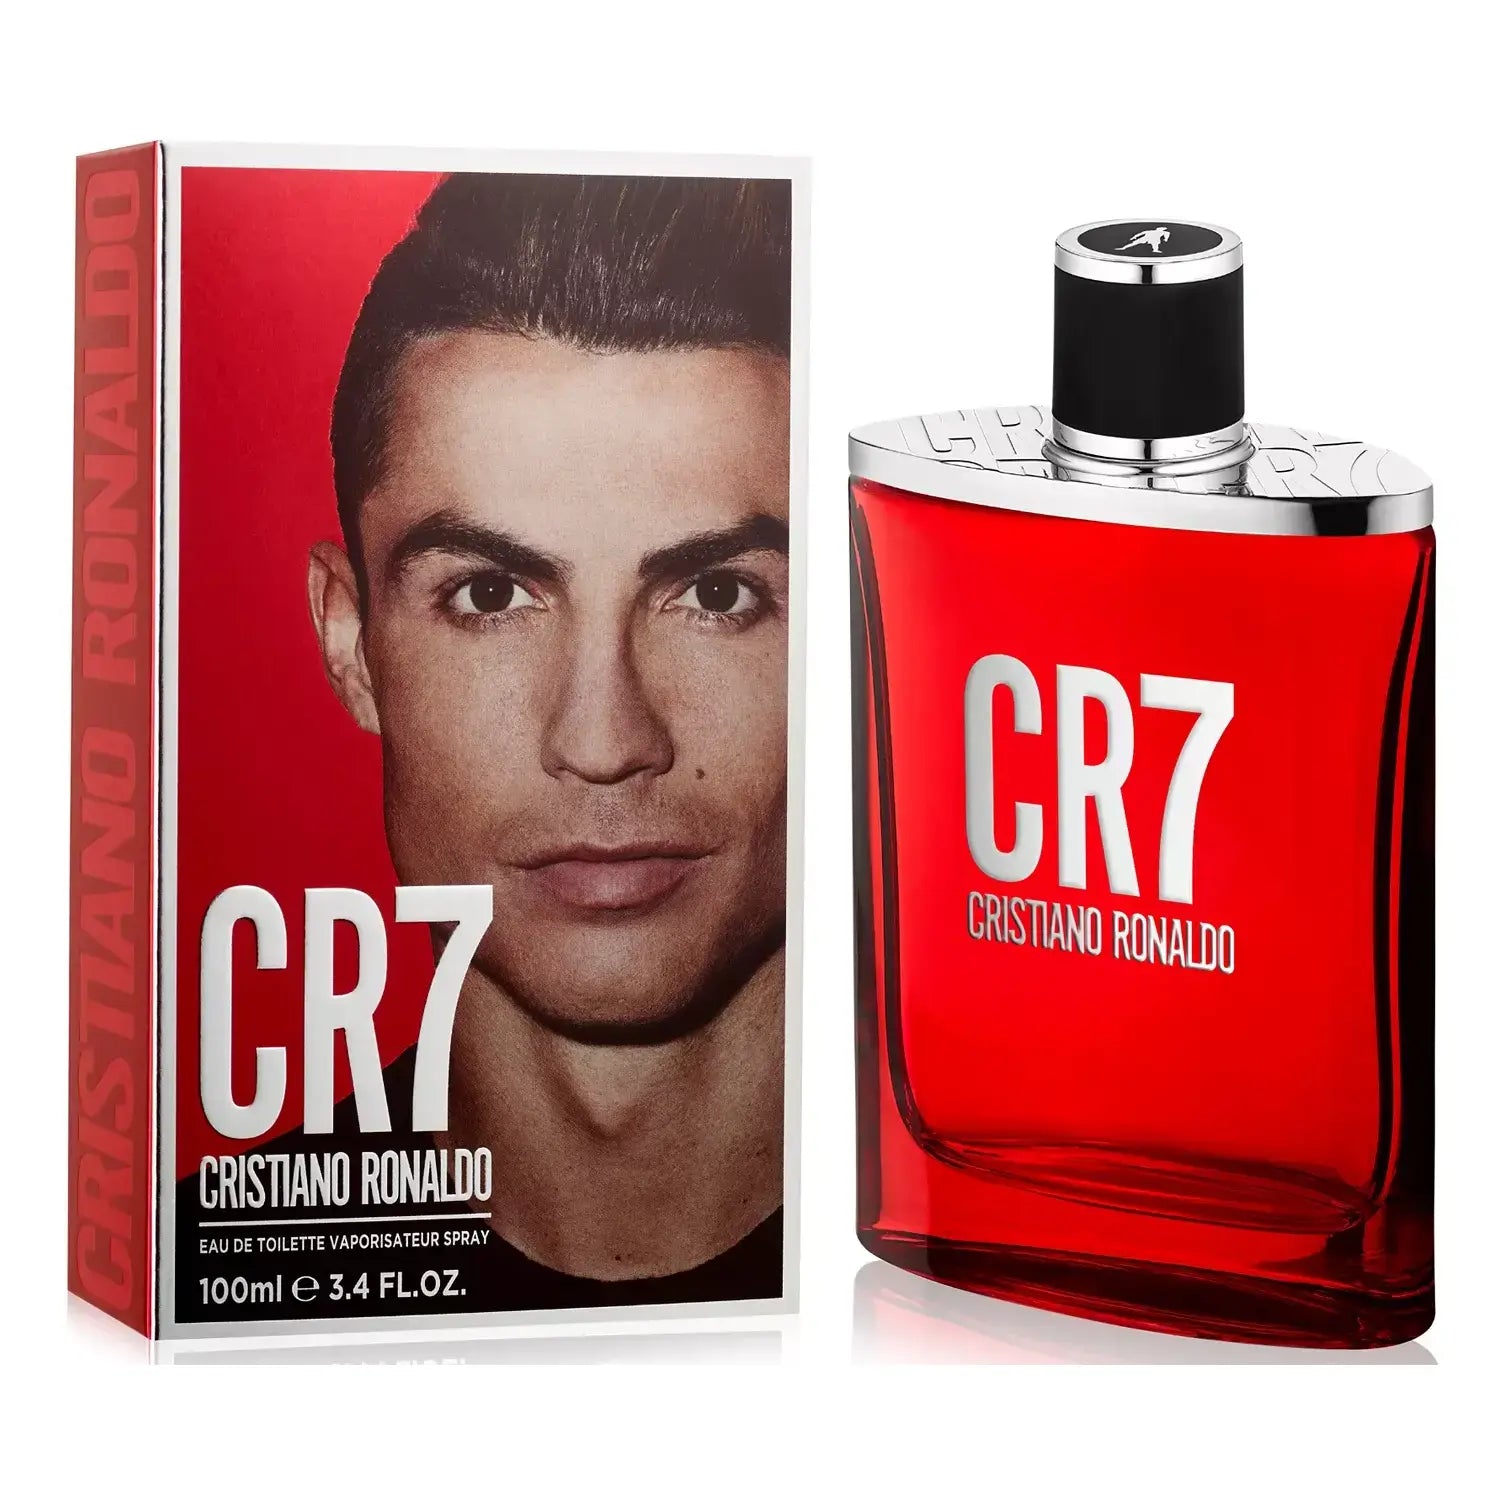 CR7 by Cristiano Ronaldo 3.4 oz EDT Spray for Men